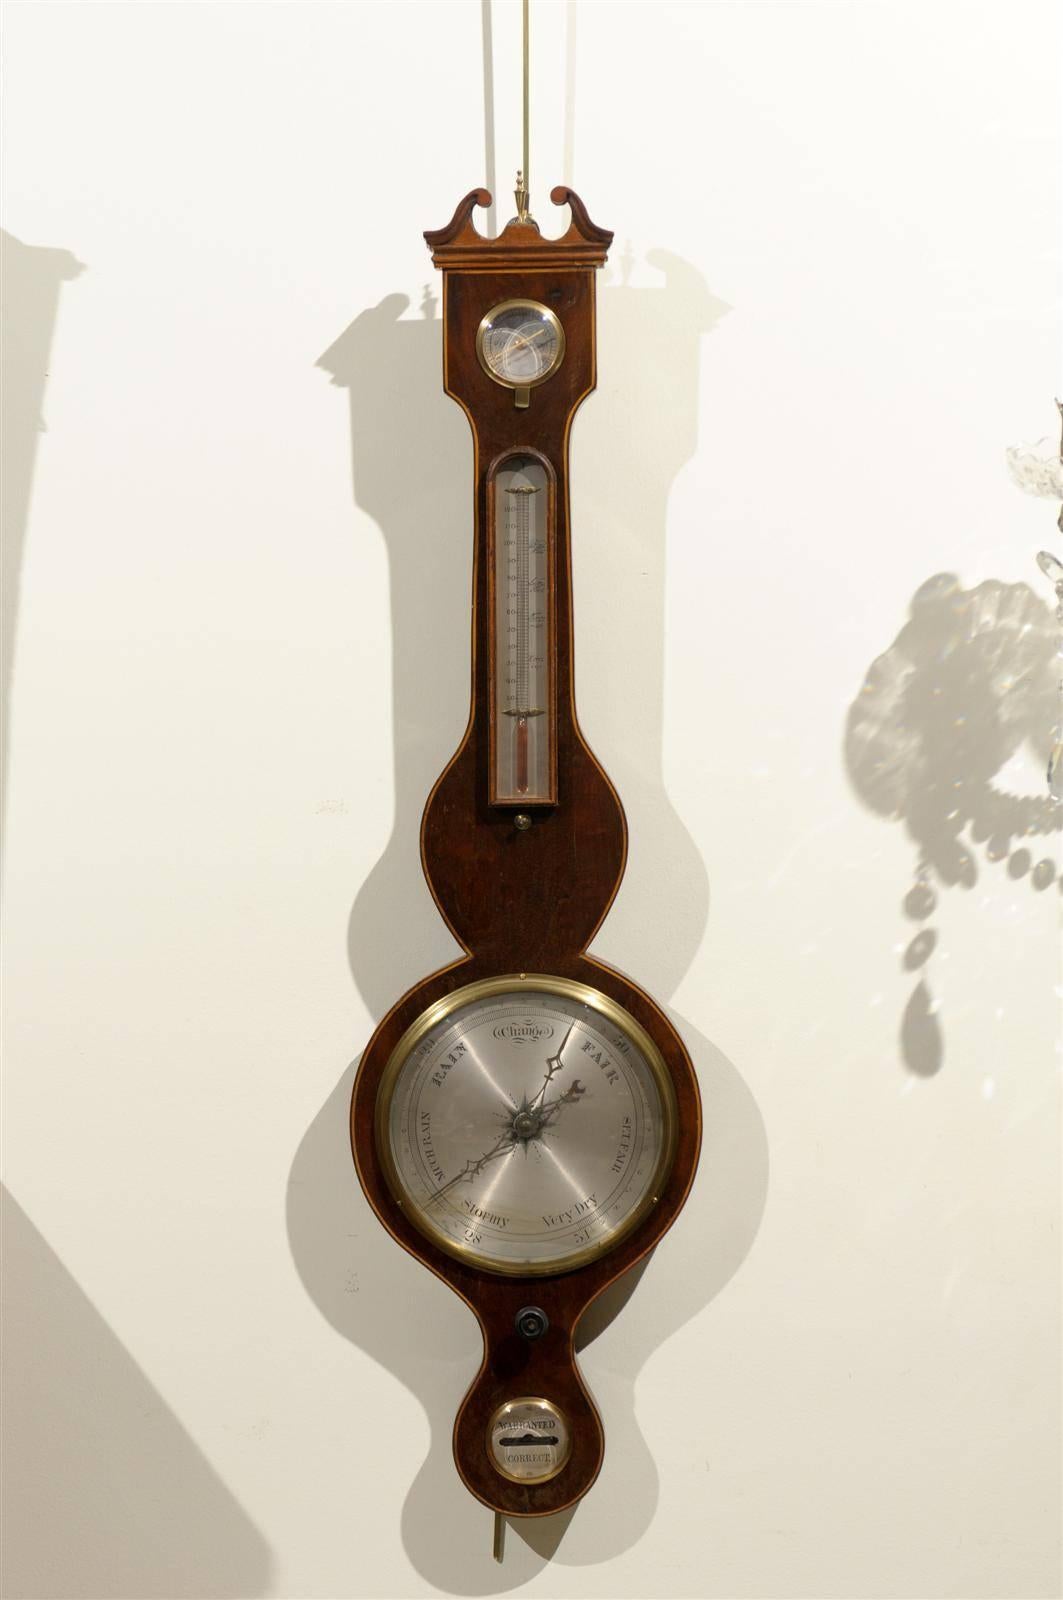 18th century English Banjo Barometer, circa 1780.